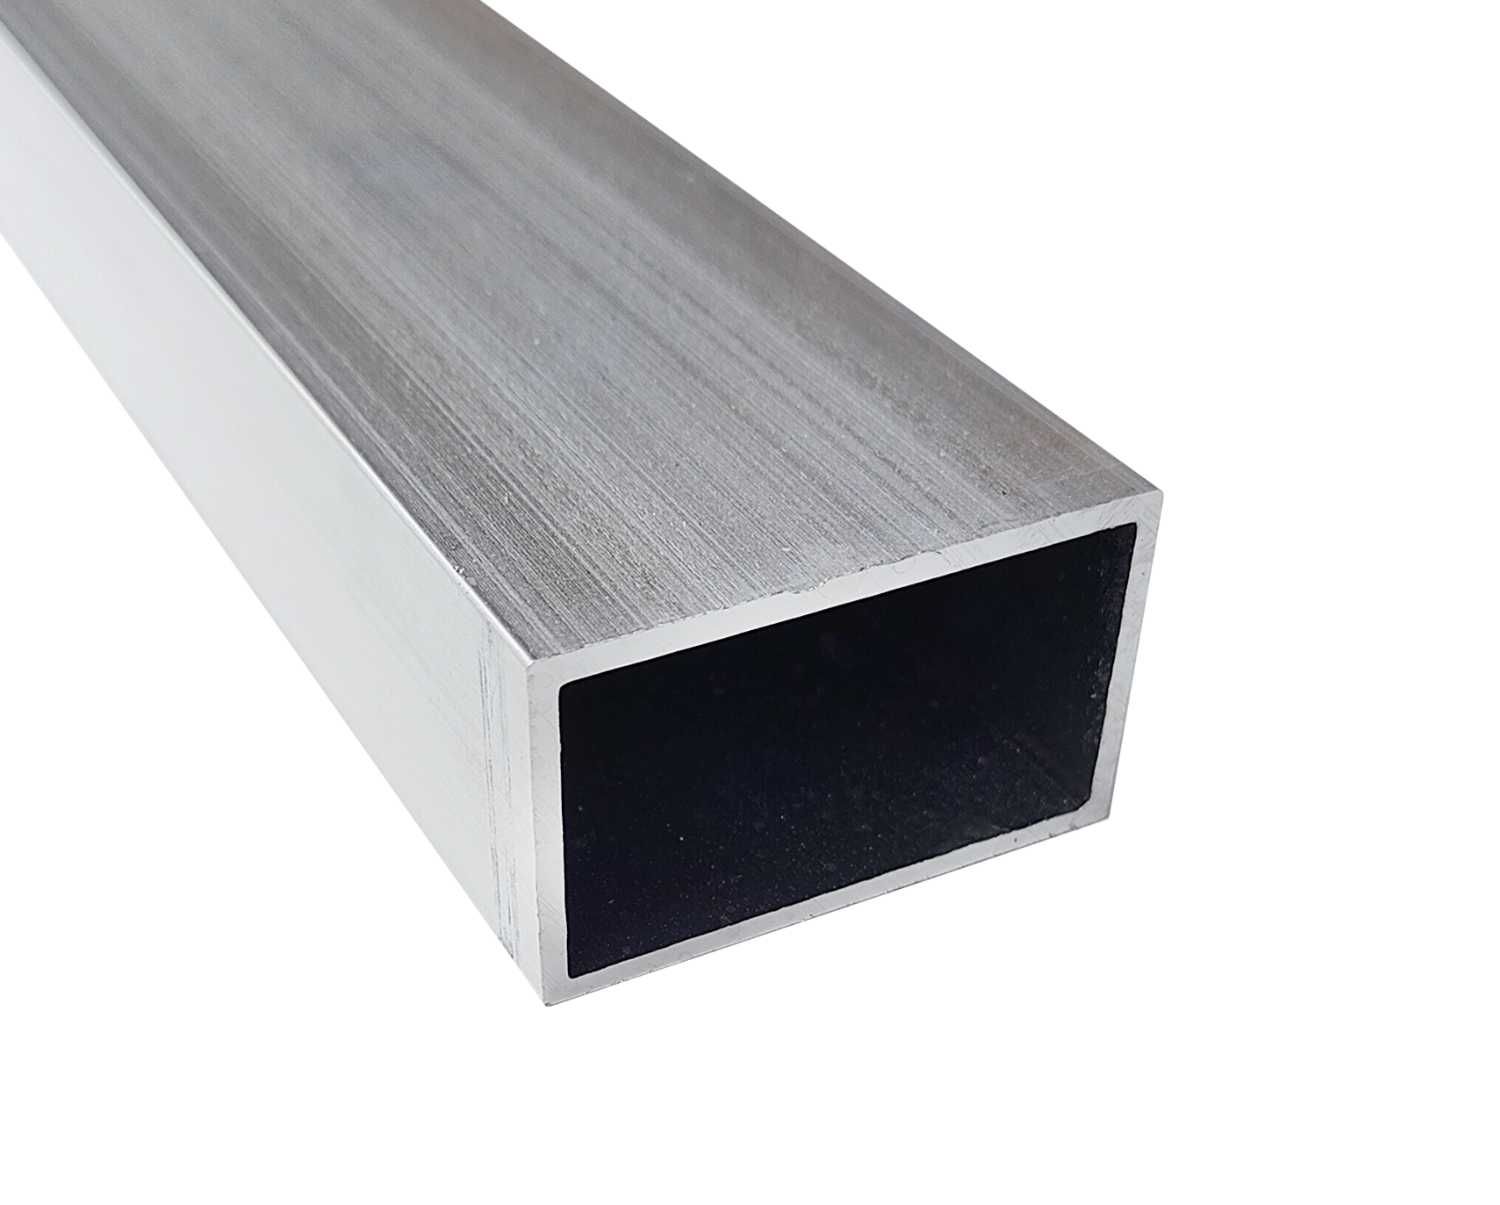 Legary profile aluminiowe pod deski tarasowe kompozytowe